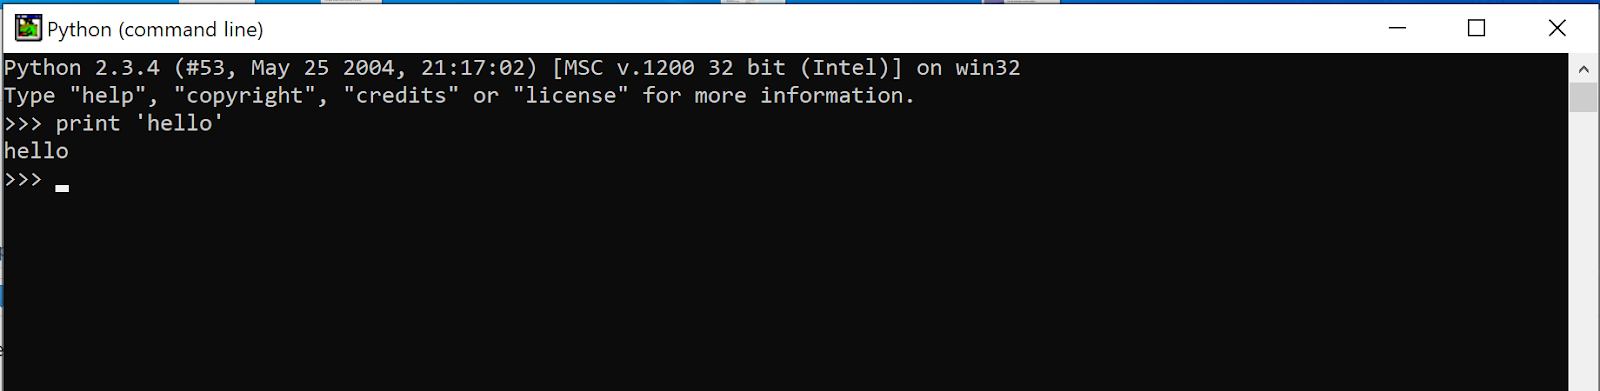 A Python command line shell displaying code for printing "hello"